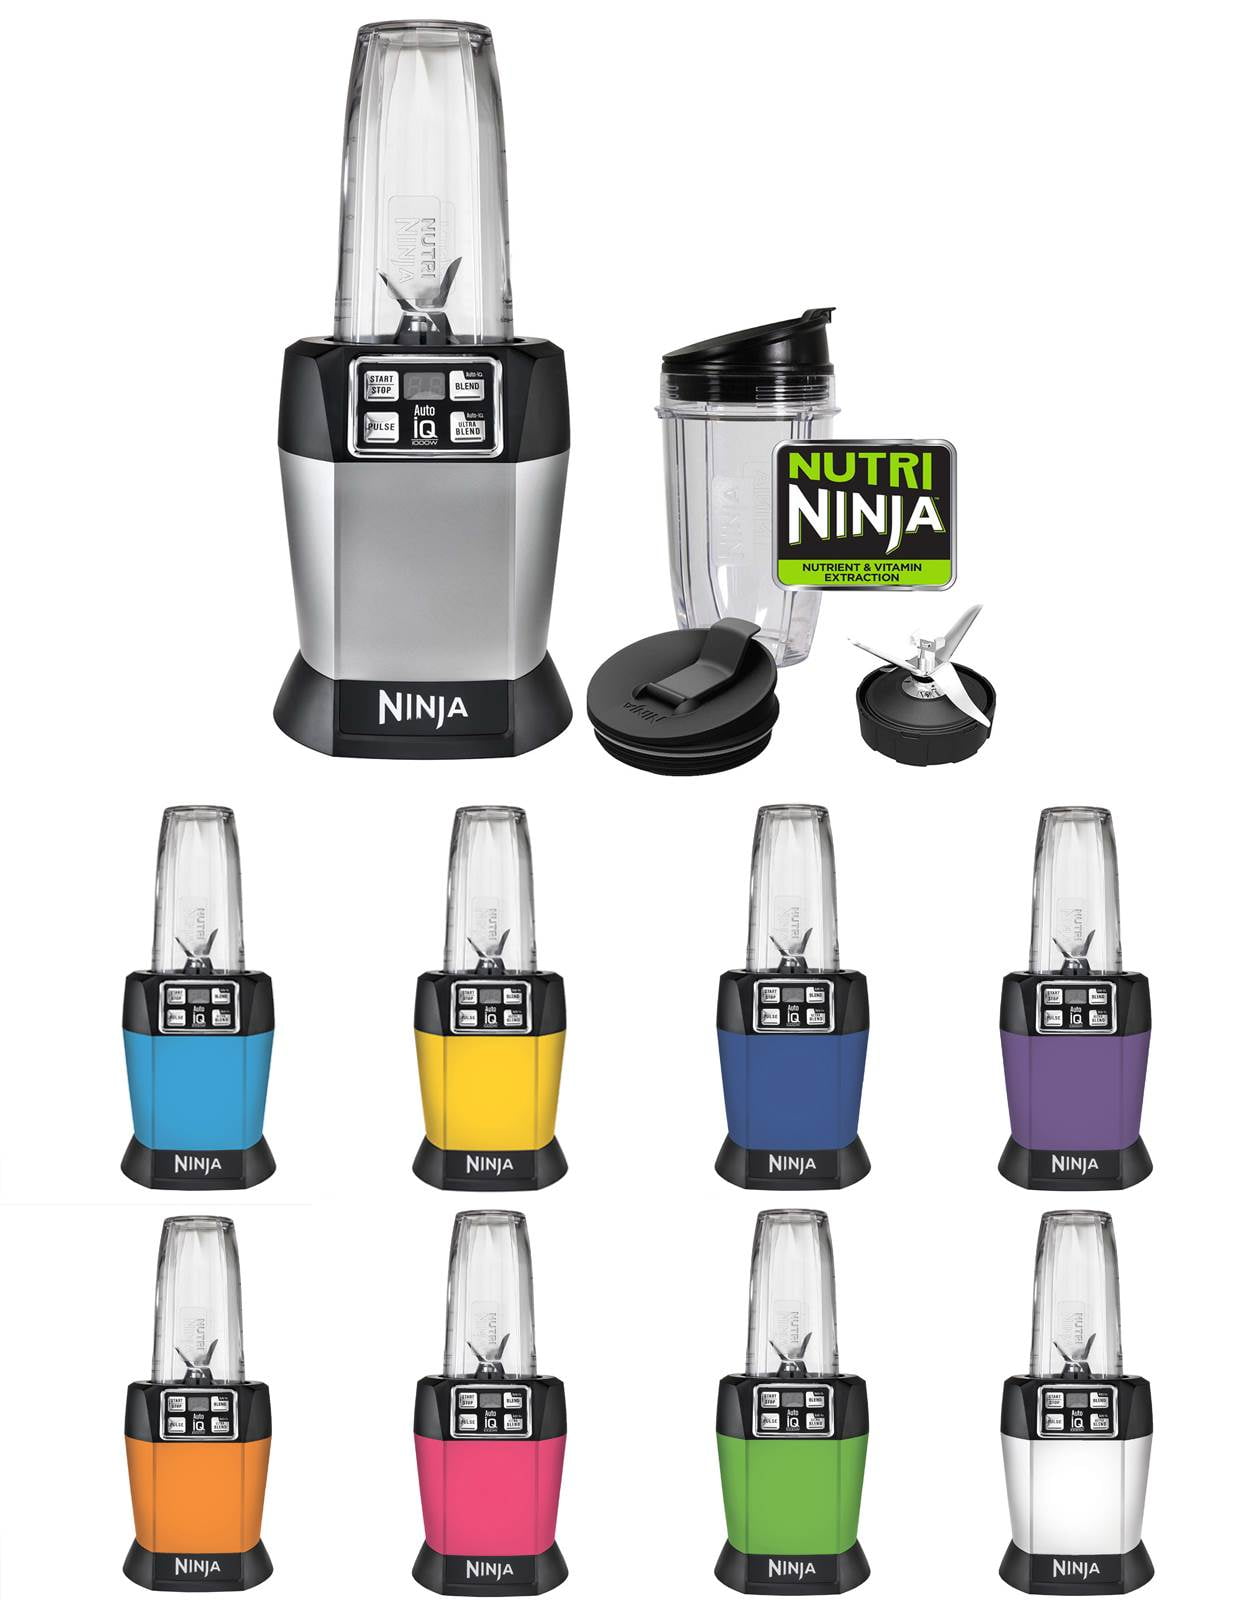 NINJA Nutri Auto iQ 24 oz. 3-Speed Black High Speed Single Serve Blender  (BL480D) BL480D - The Home Depot